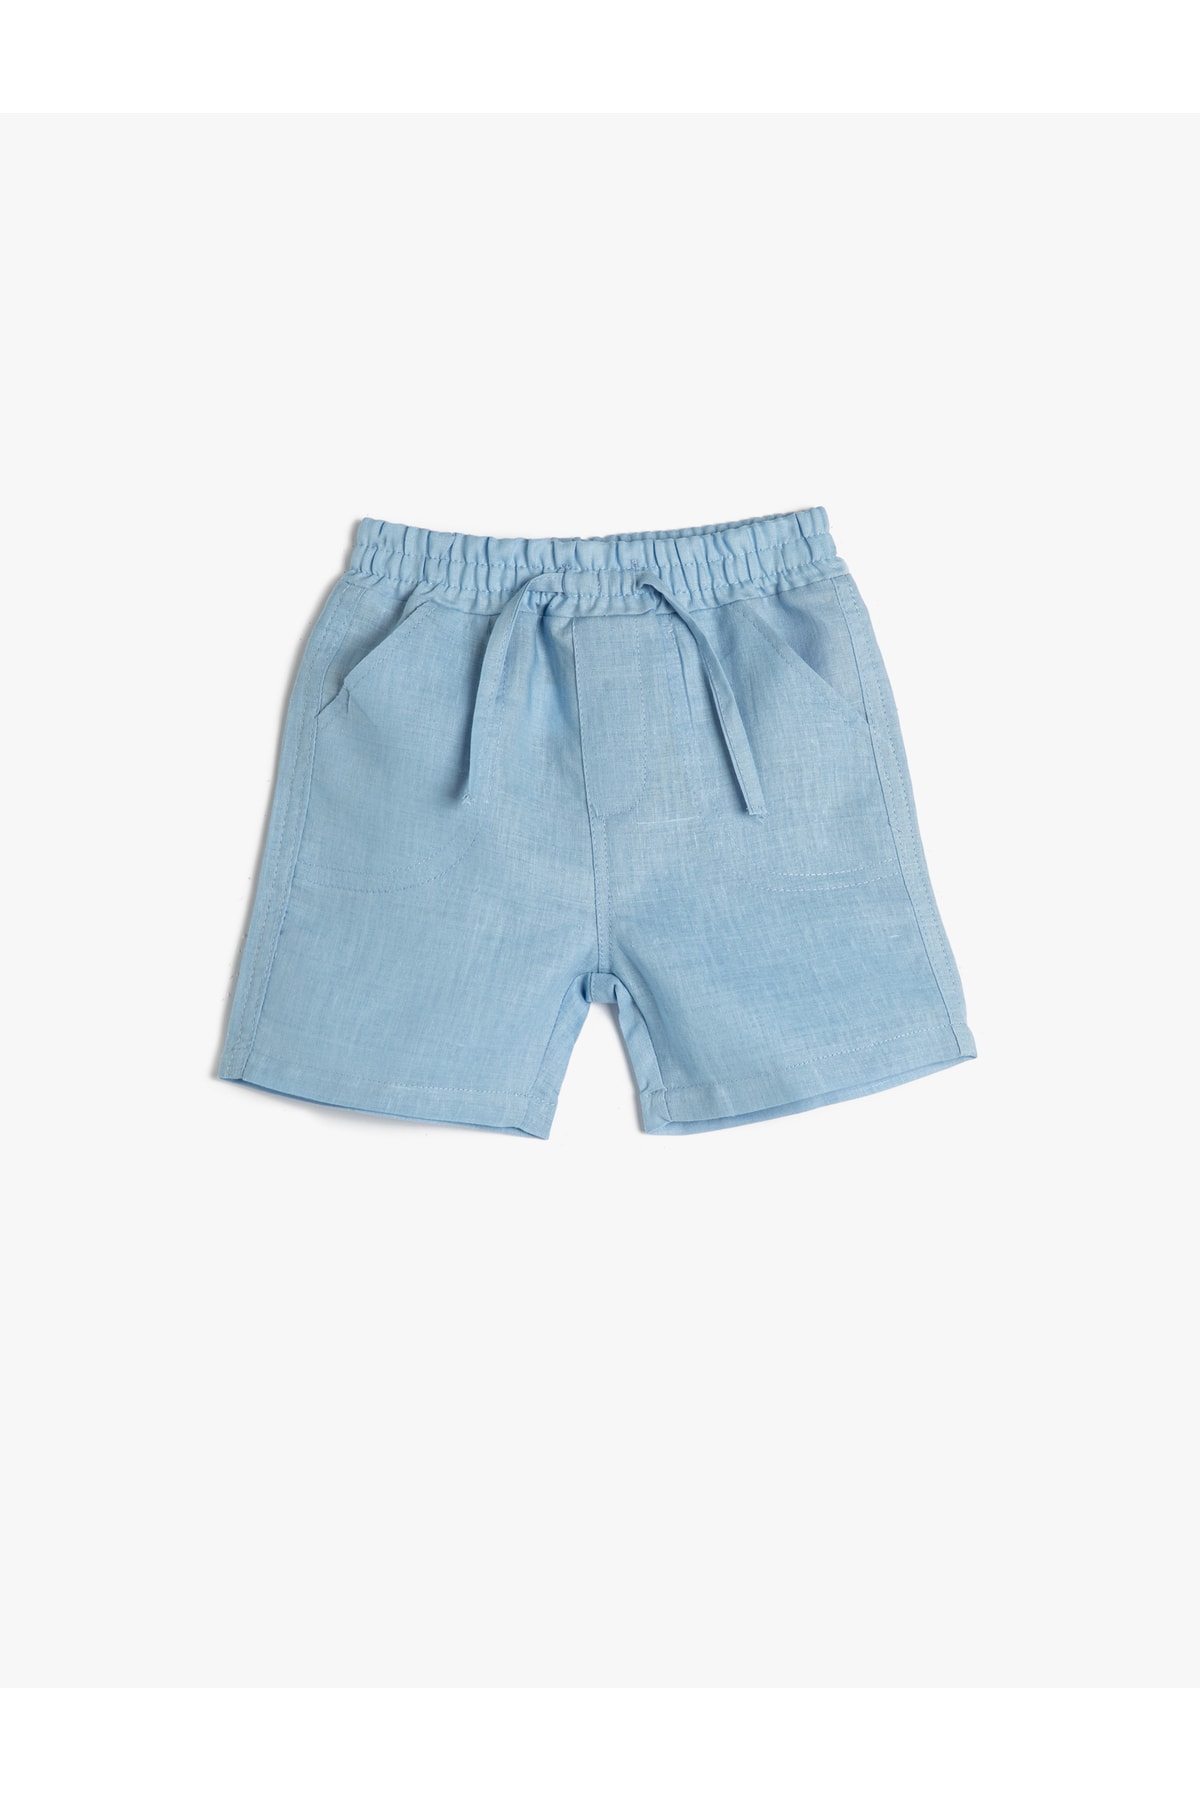 Koton Linen Shorts with Pockets Elastic Tie Waist